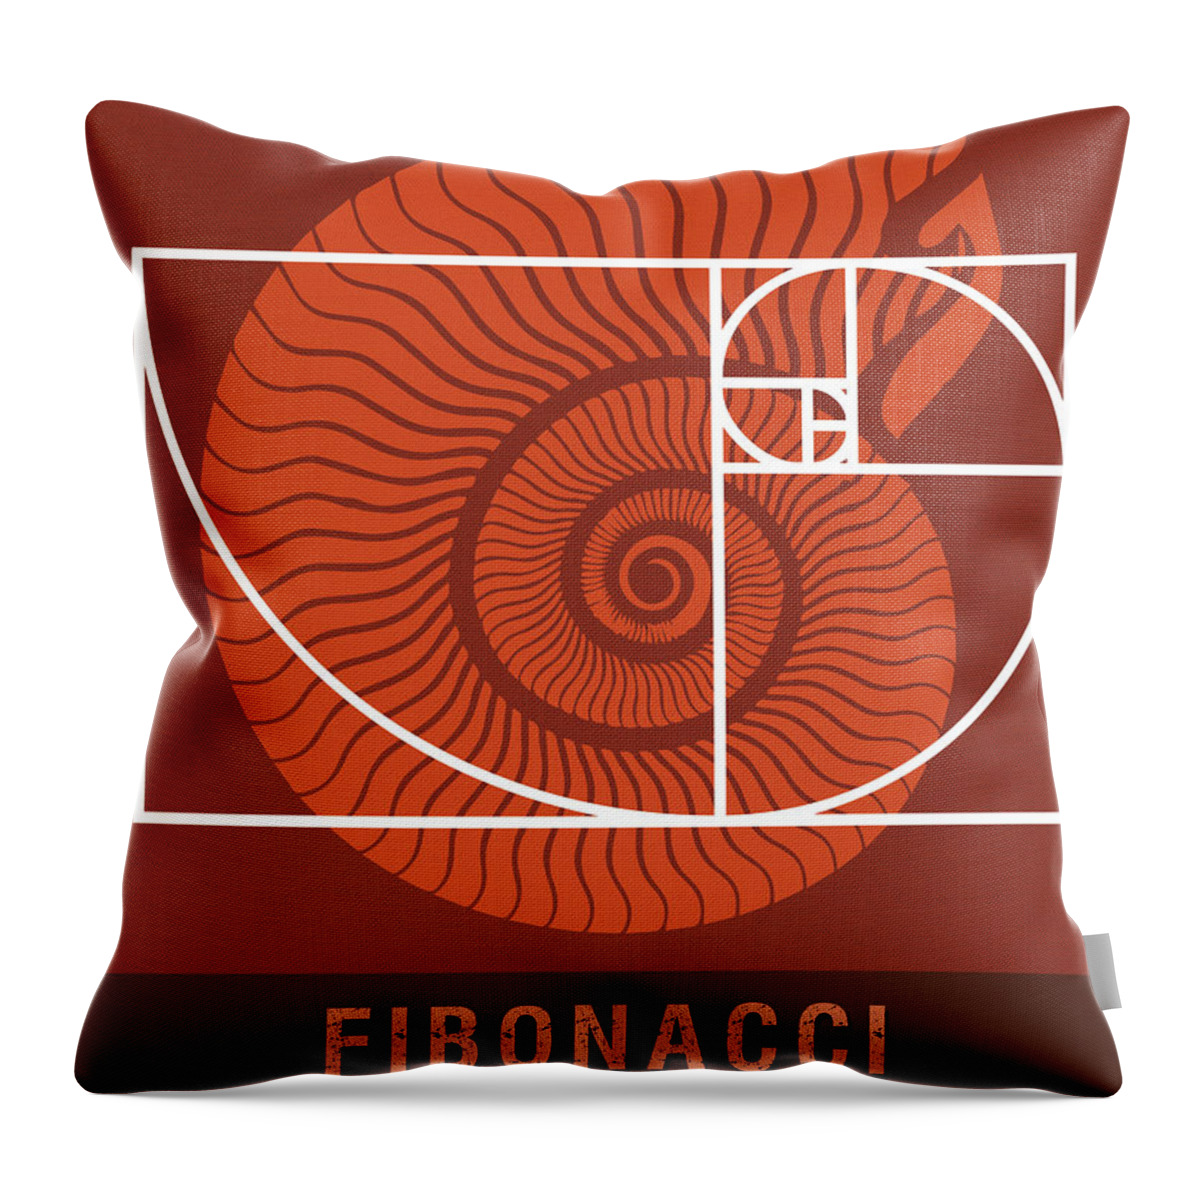 Fibonacci Throw Pillow featuring the mixed media Science Posters - Fibonacci - Mathematician by Studio Grafiikka